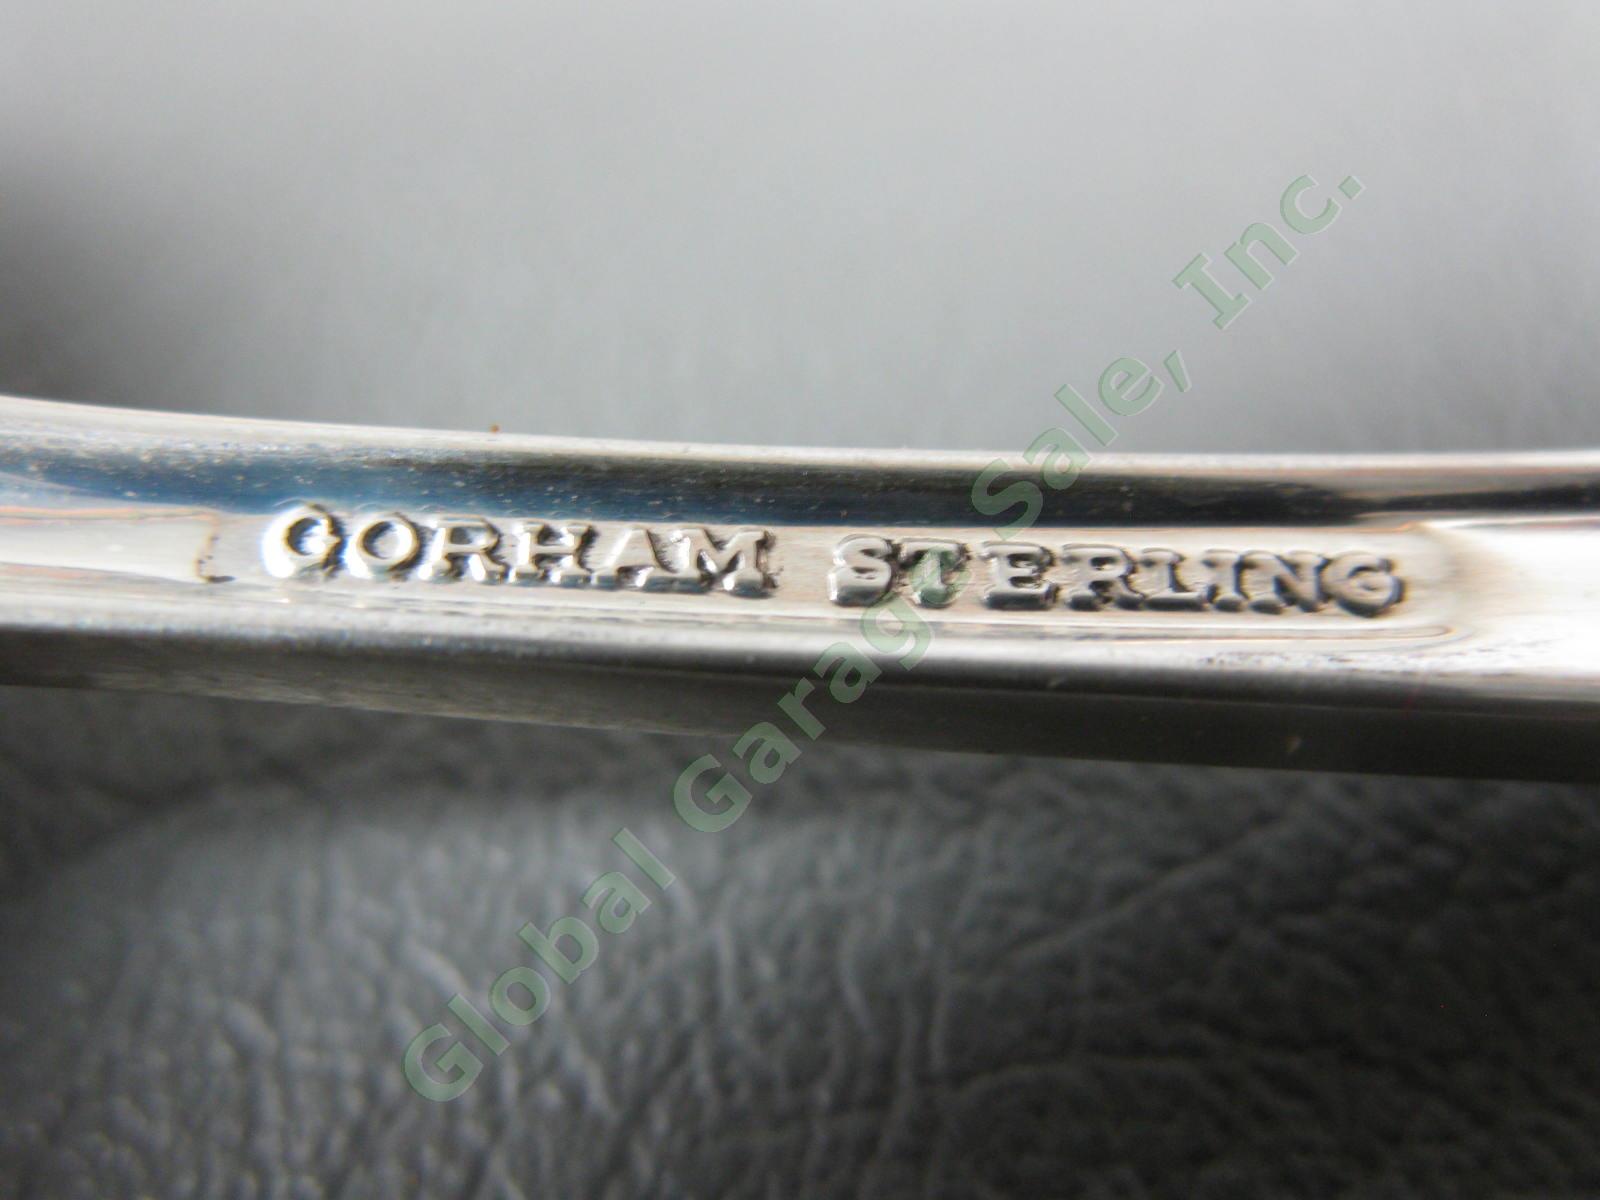 6 Gorham Firelight Sterling Silver 7 1/8" Desert Oval Soup Spoon Set 278g Grams 3